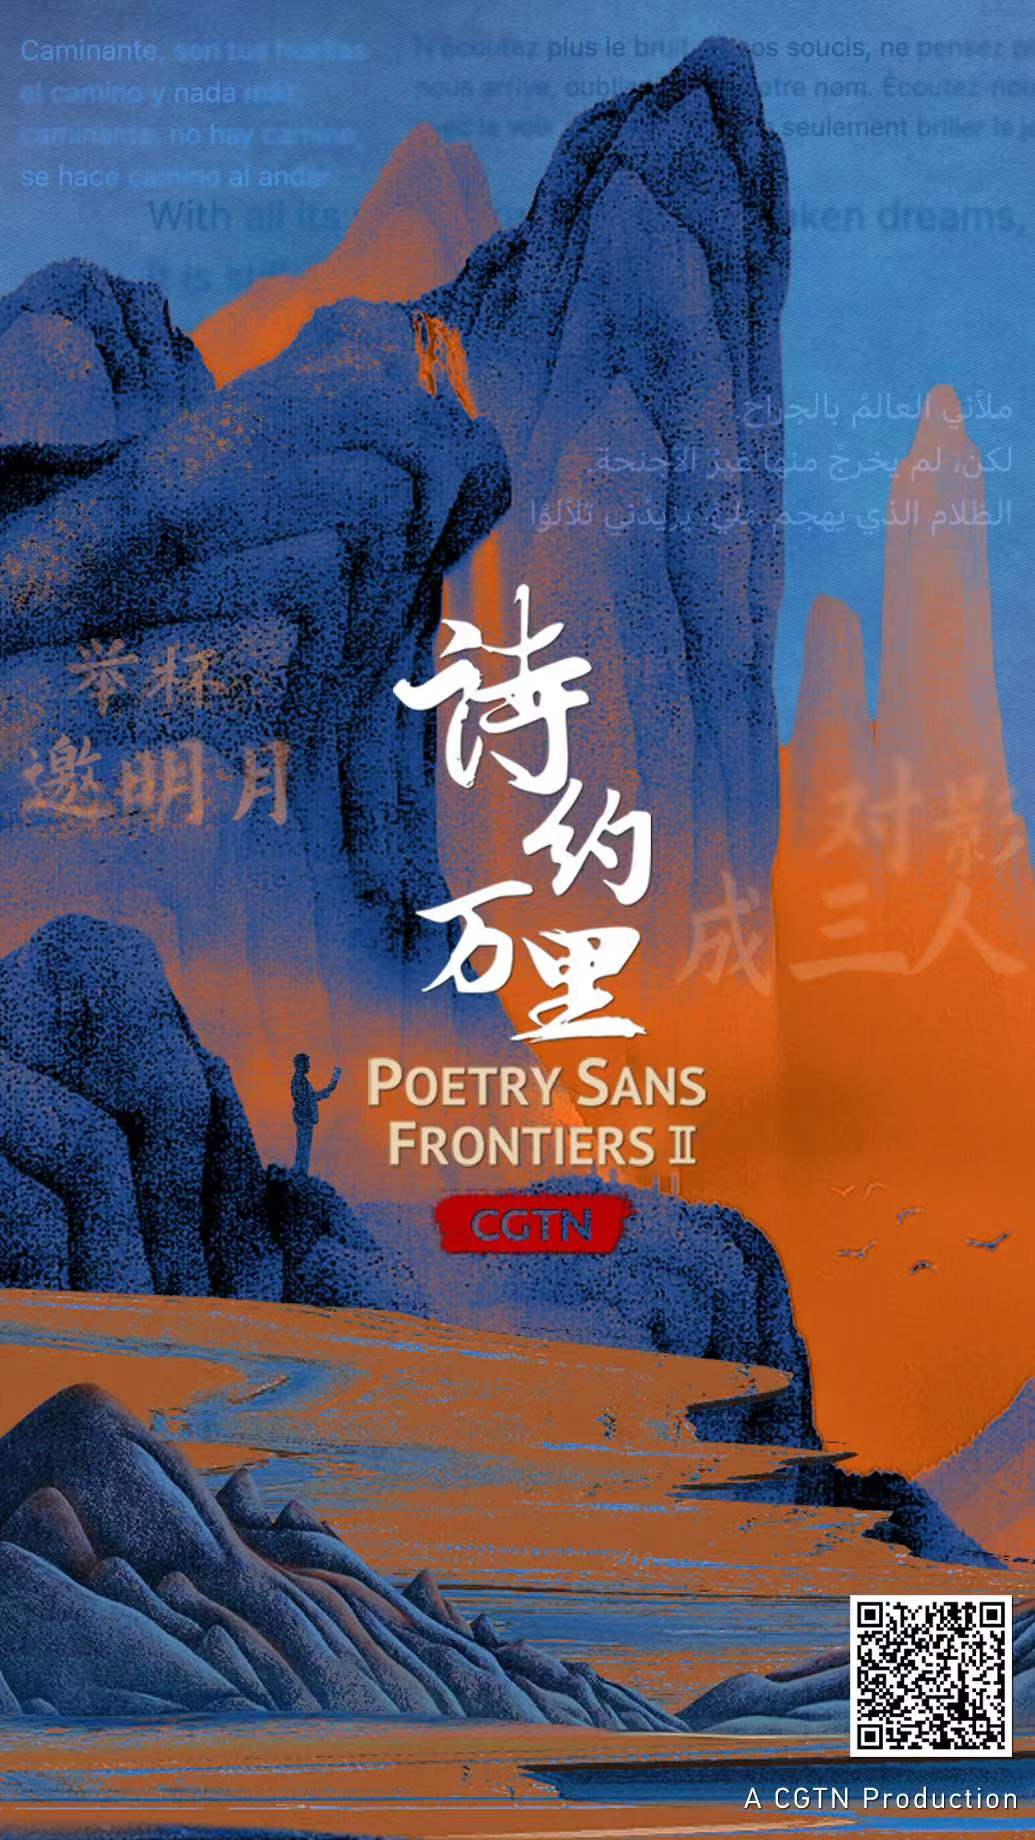 'Poetry Sans Frontiers' series